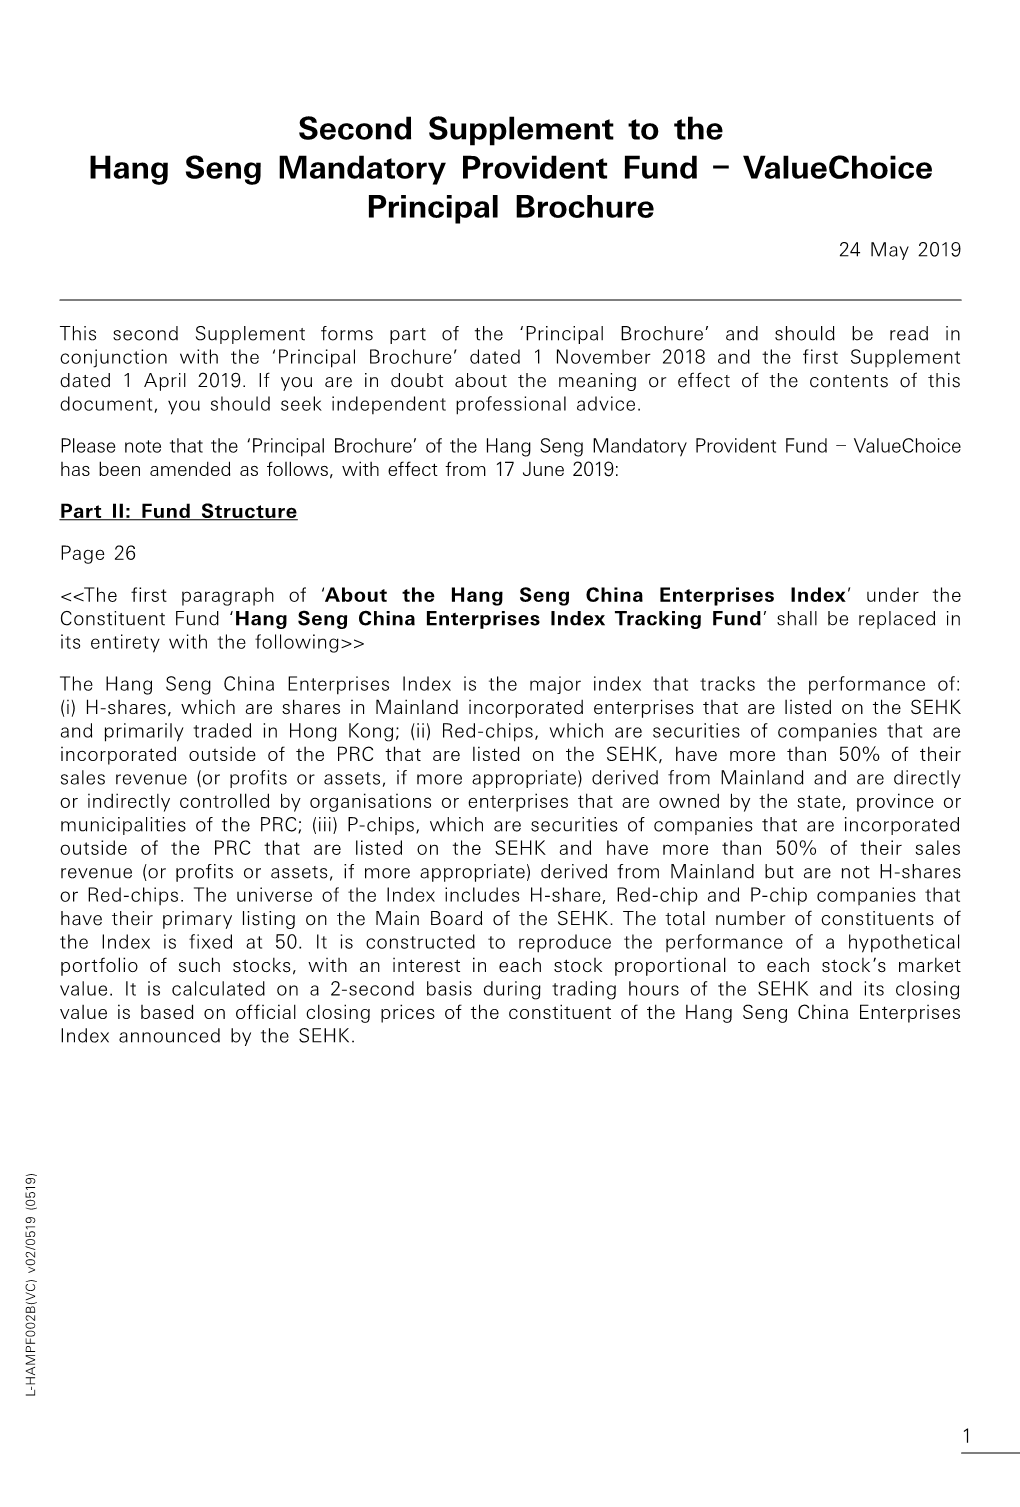 Second Supplement to the Hang Seng Mandatory Provident Fund – Valuechoice Principal Brochure 24 May 2019